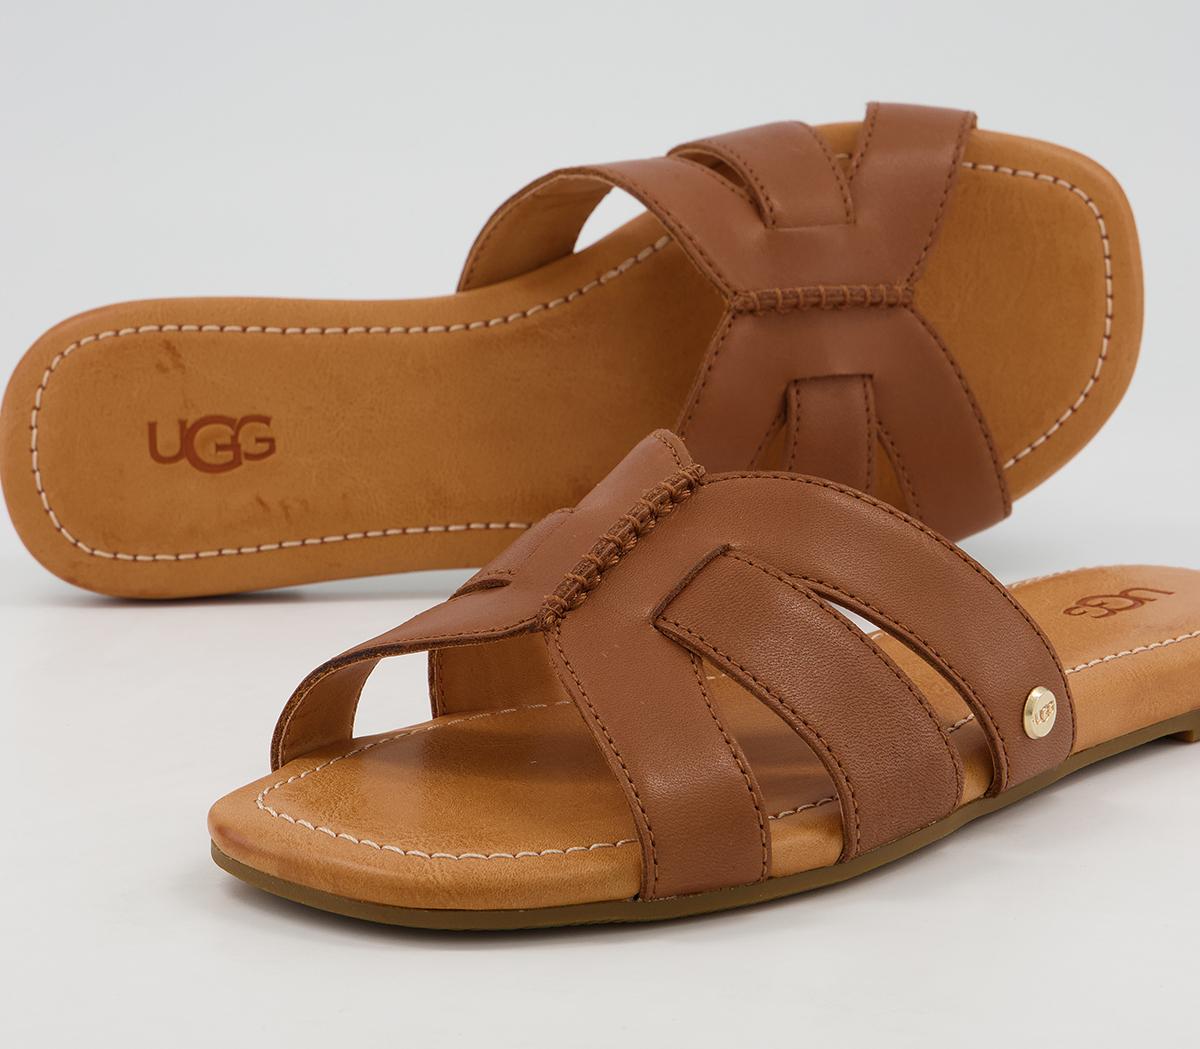 UGG Teague Sandals Tan Leather - Women’s Sandals